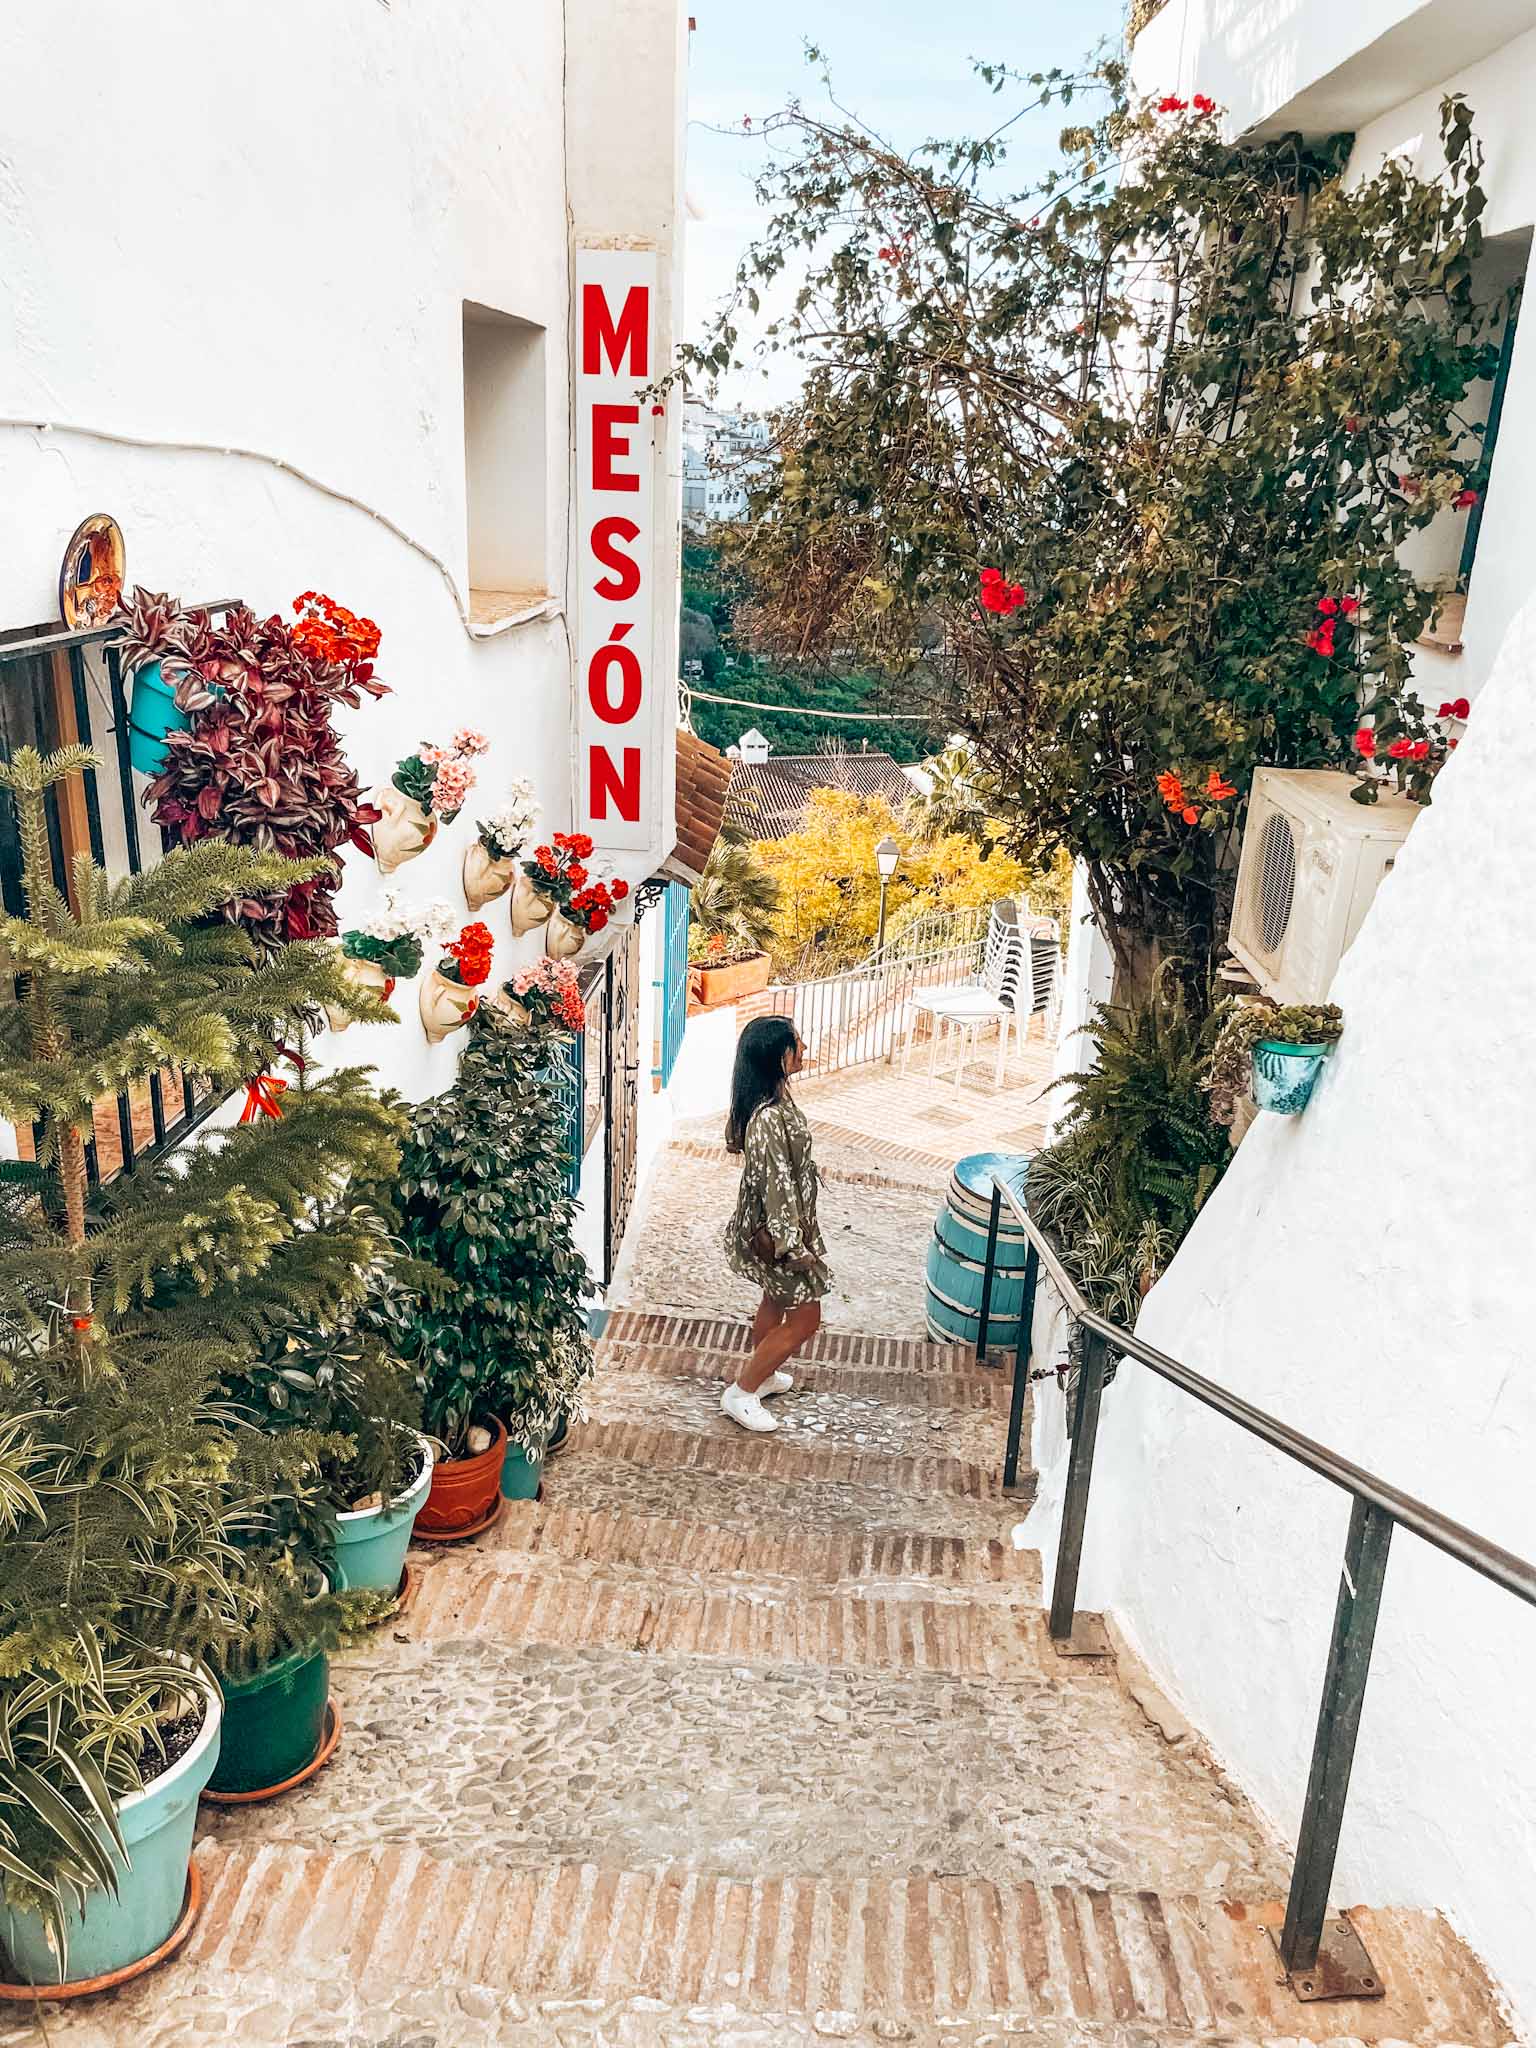 Best Instagram spots of the most beautiful places in Frigiliana village, Spain